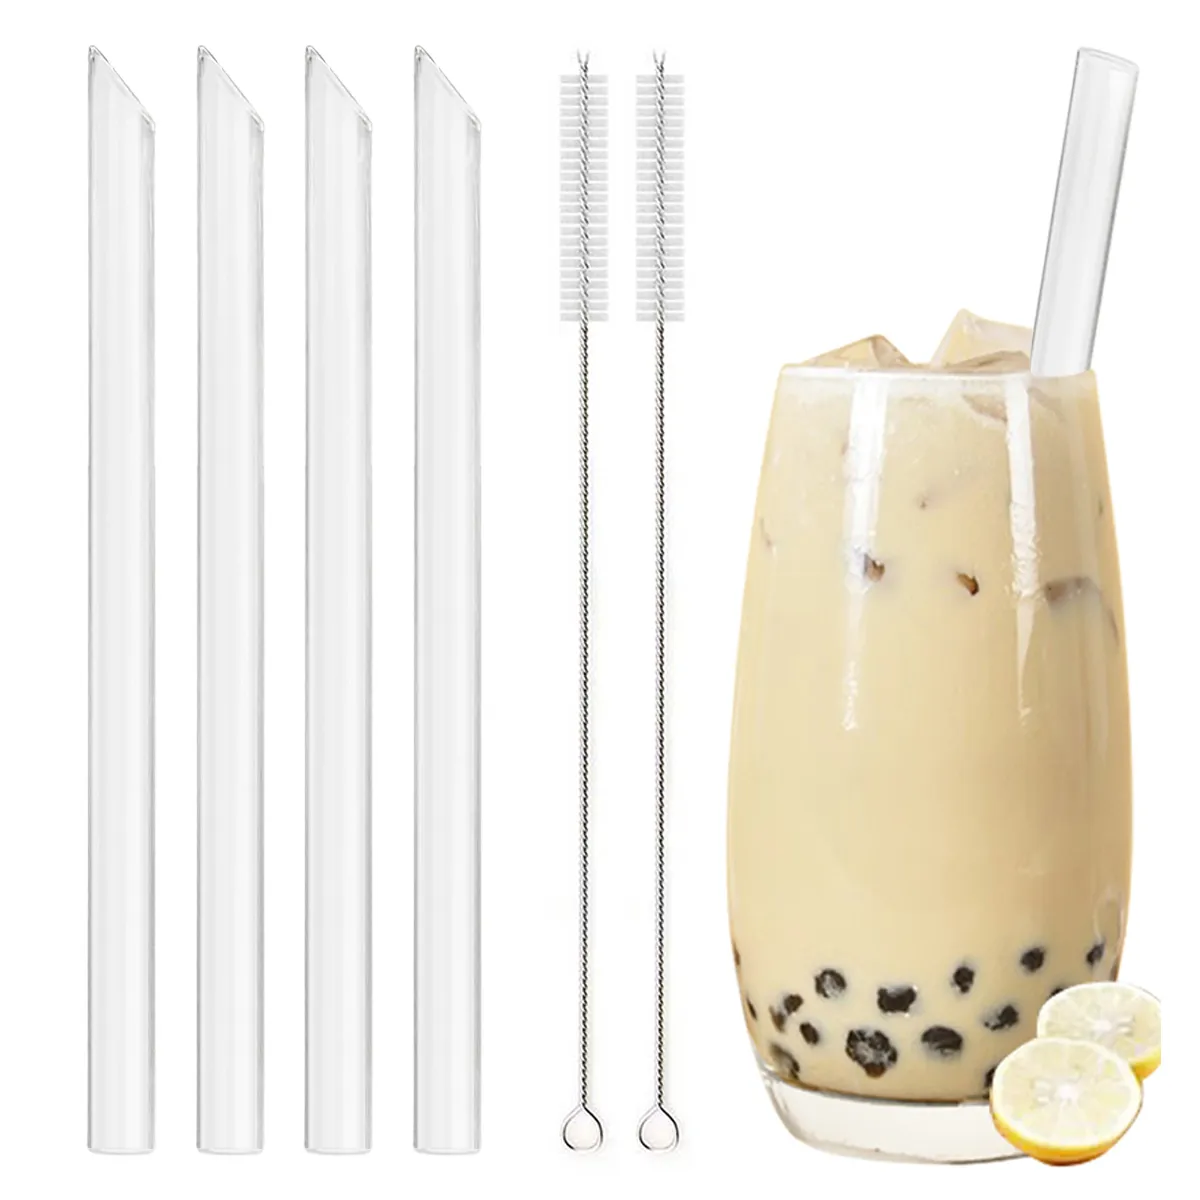 https://ae01.alicdn.com/kf/Sf8d4c2c033674cd1b5f6163c0a8c1642a/High-Borosilicate-Glass-Straws-Straight-Reusable-Drinking-Straw-Boba-Bubble-Tea-Milk-Smoothies-Fruit-Cocktails-Bar.jpg